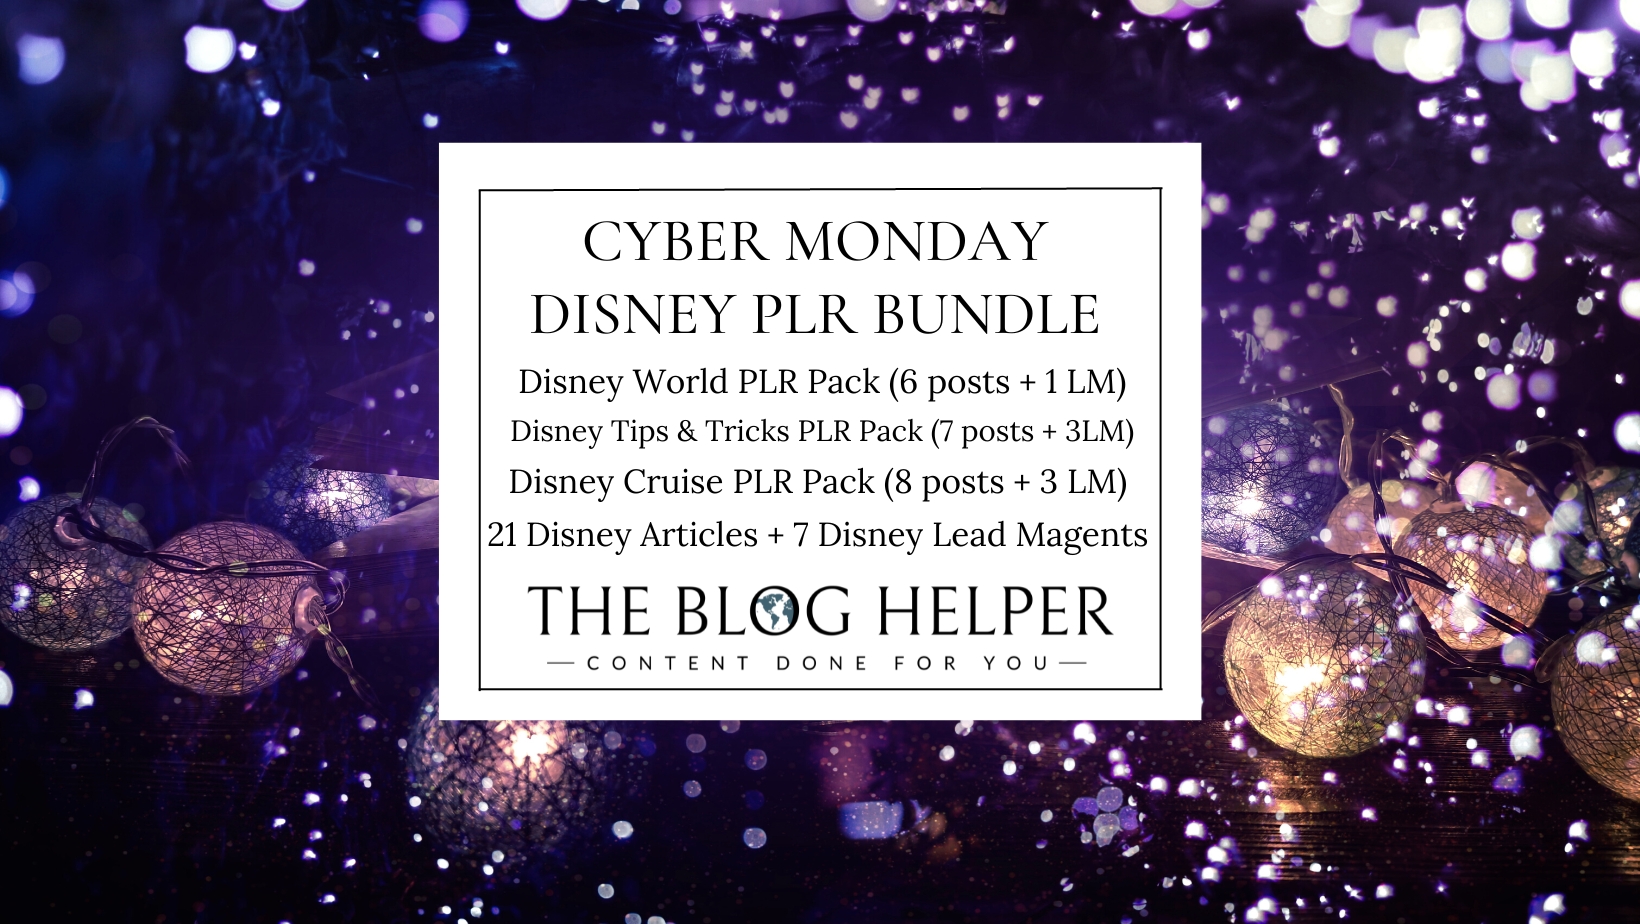 Disney PLR Bundle - Cyber Monday Special